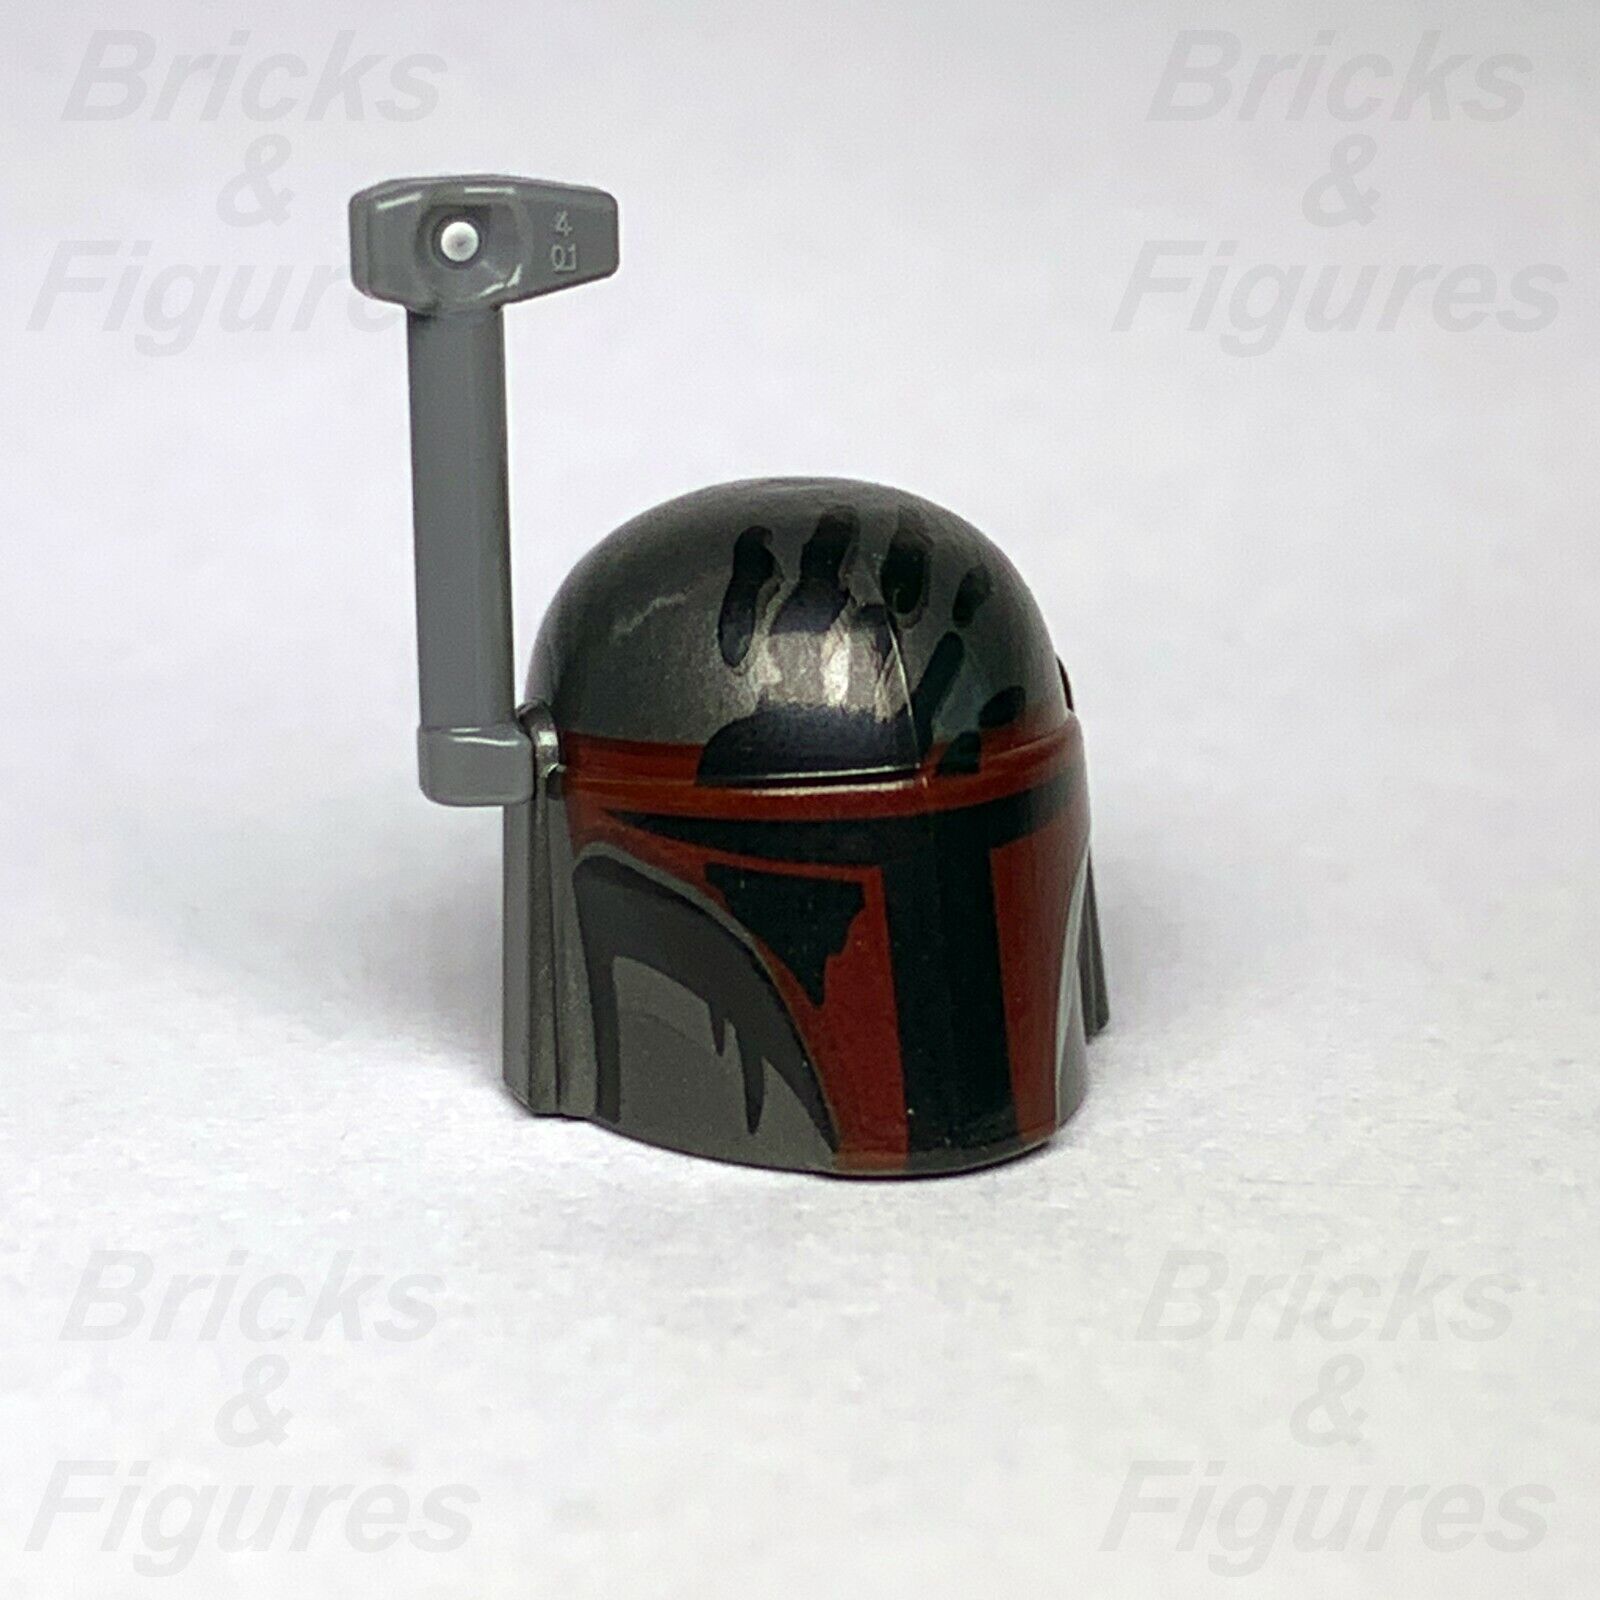 Star Wars LEGO Mandalorian Helmet with Handprint Rebels 75022 Genuine Parts